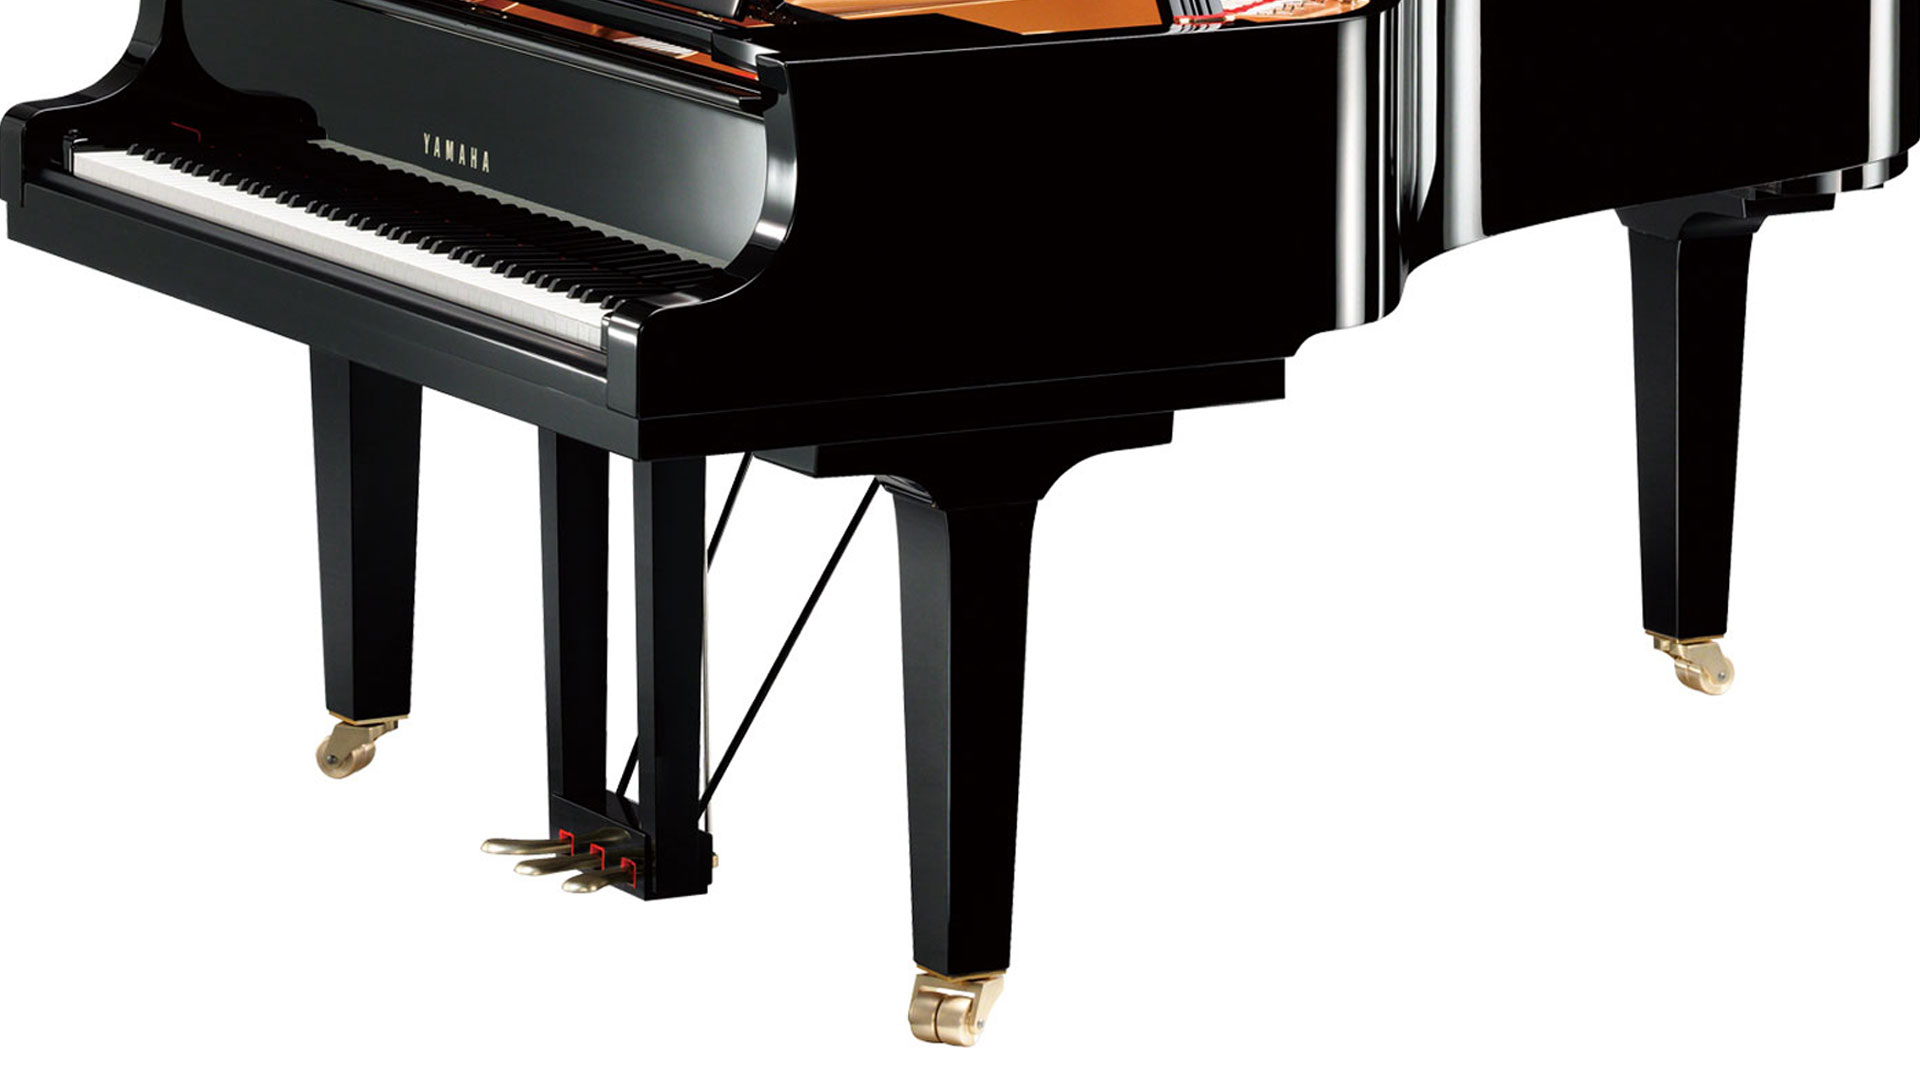 Yamaha grand piano Model c6x